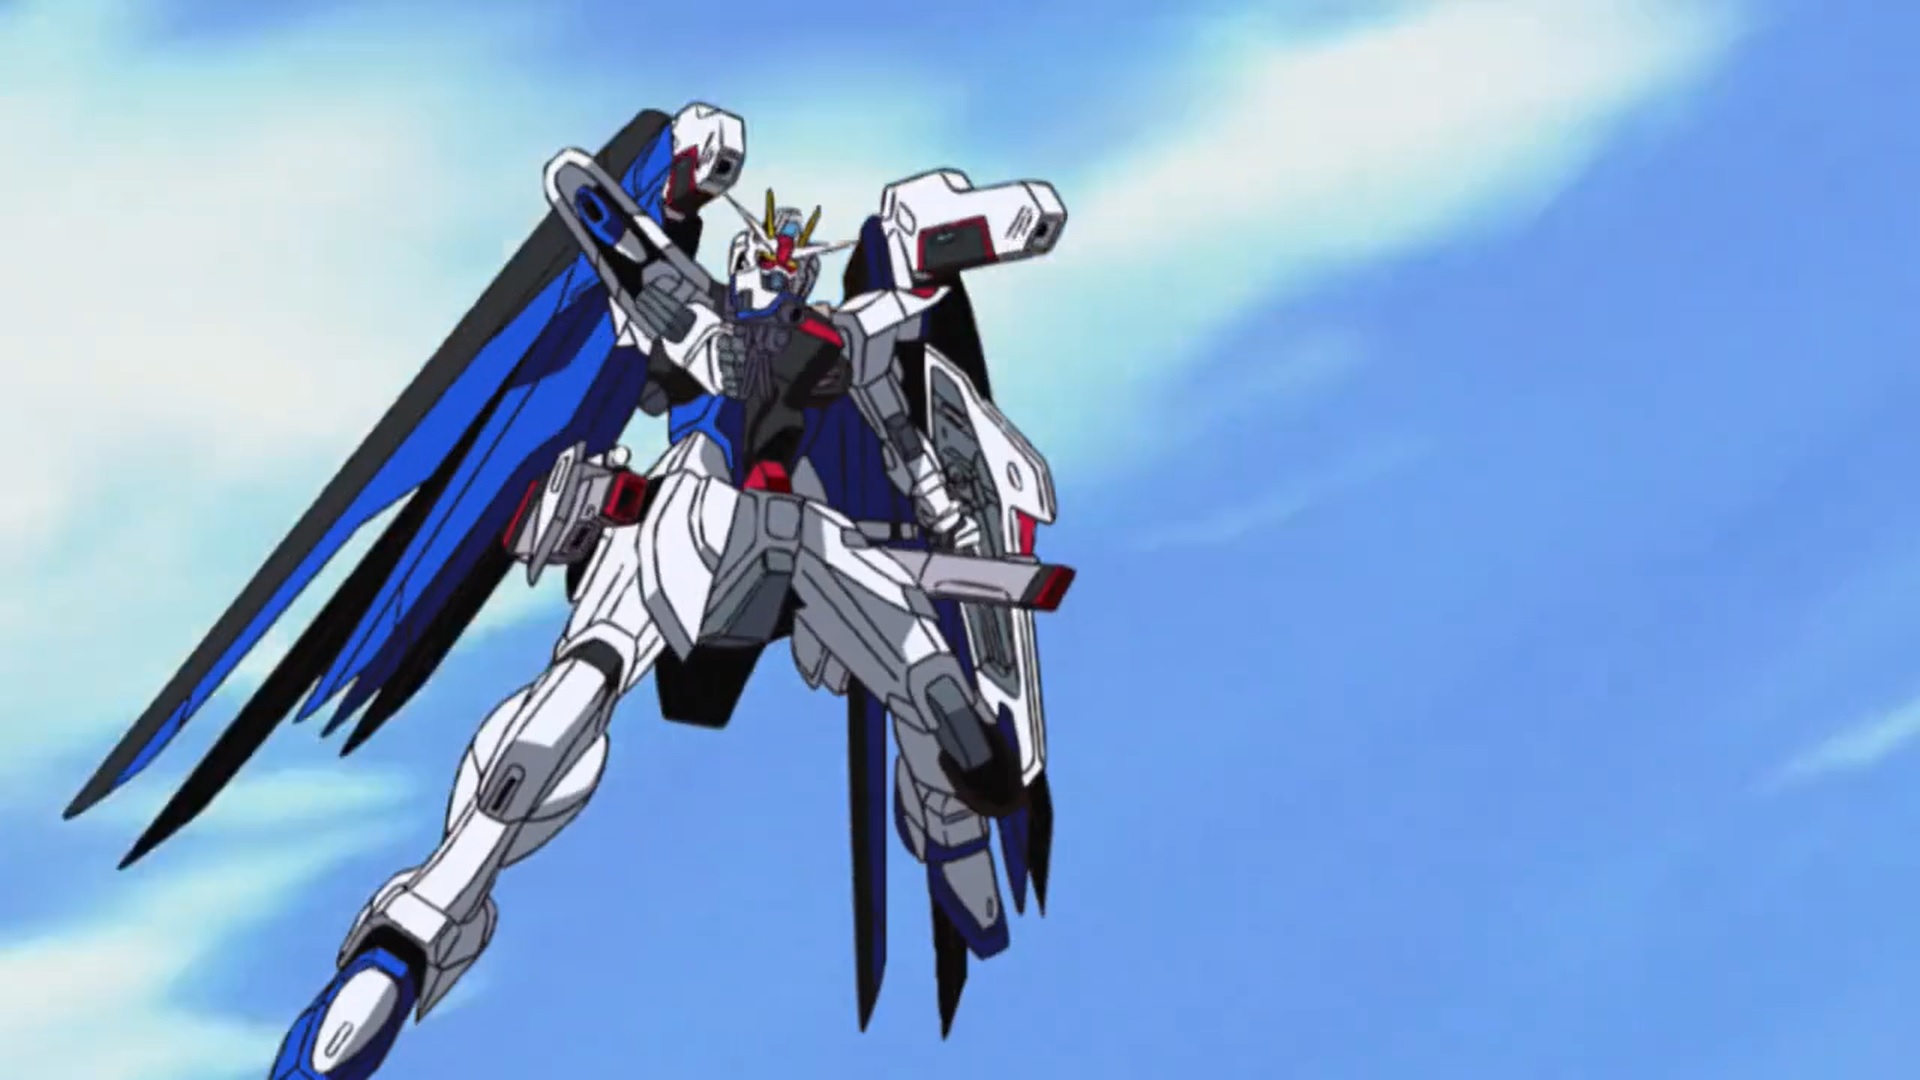 Anime 1920x1080 anime mechs Anime screenshot Mobile Suit Gundam SEED Gundam Super Robot Taisen Freedom Gundam artwork digital art